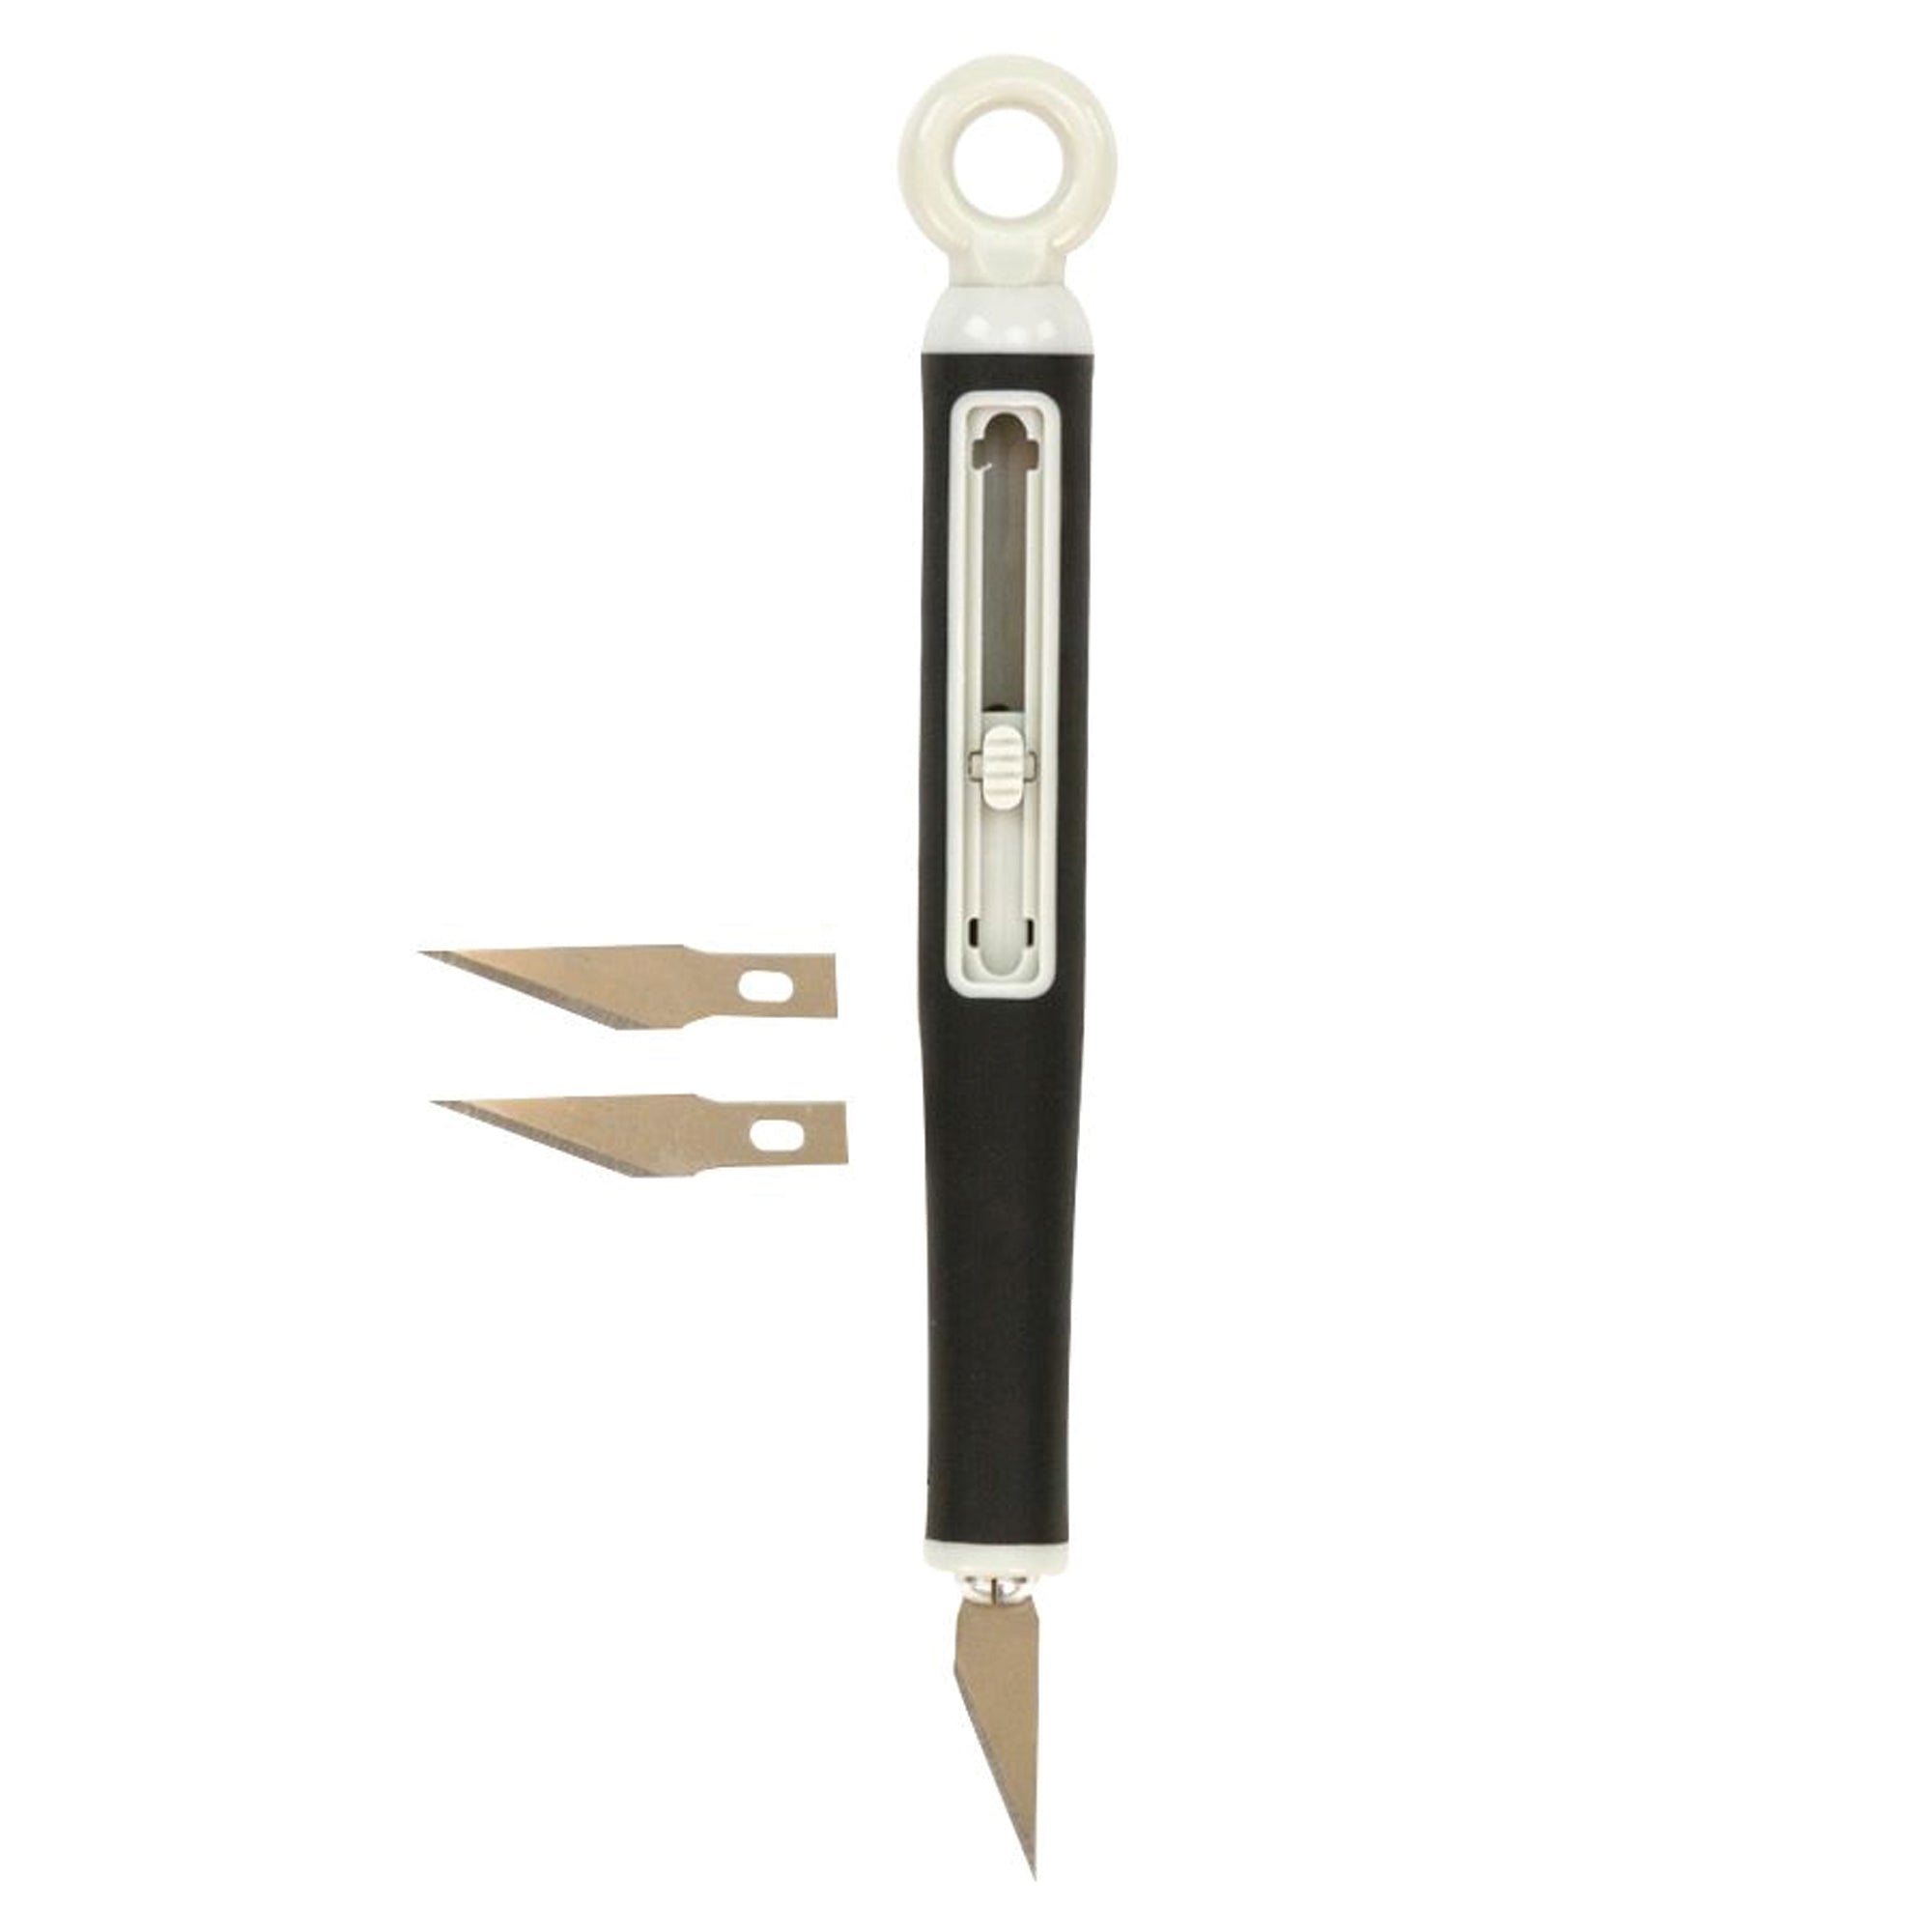 Tim Holtz Retractable Craft Knife w/3 Blades